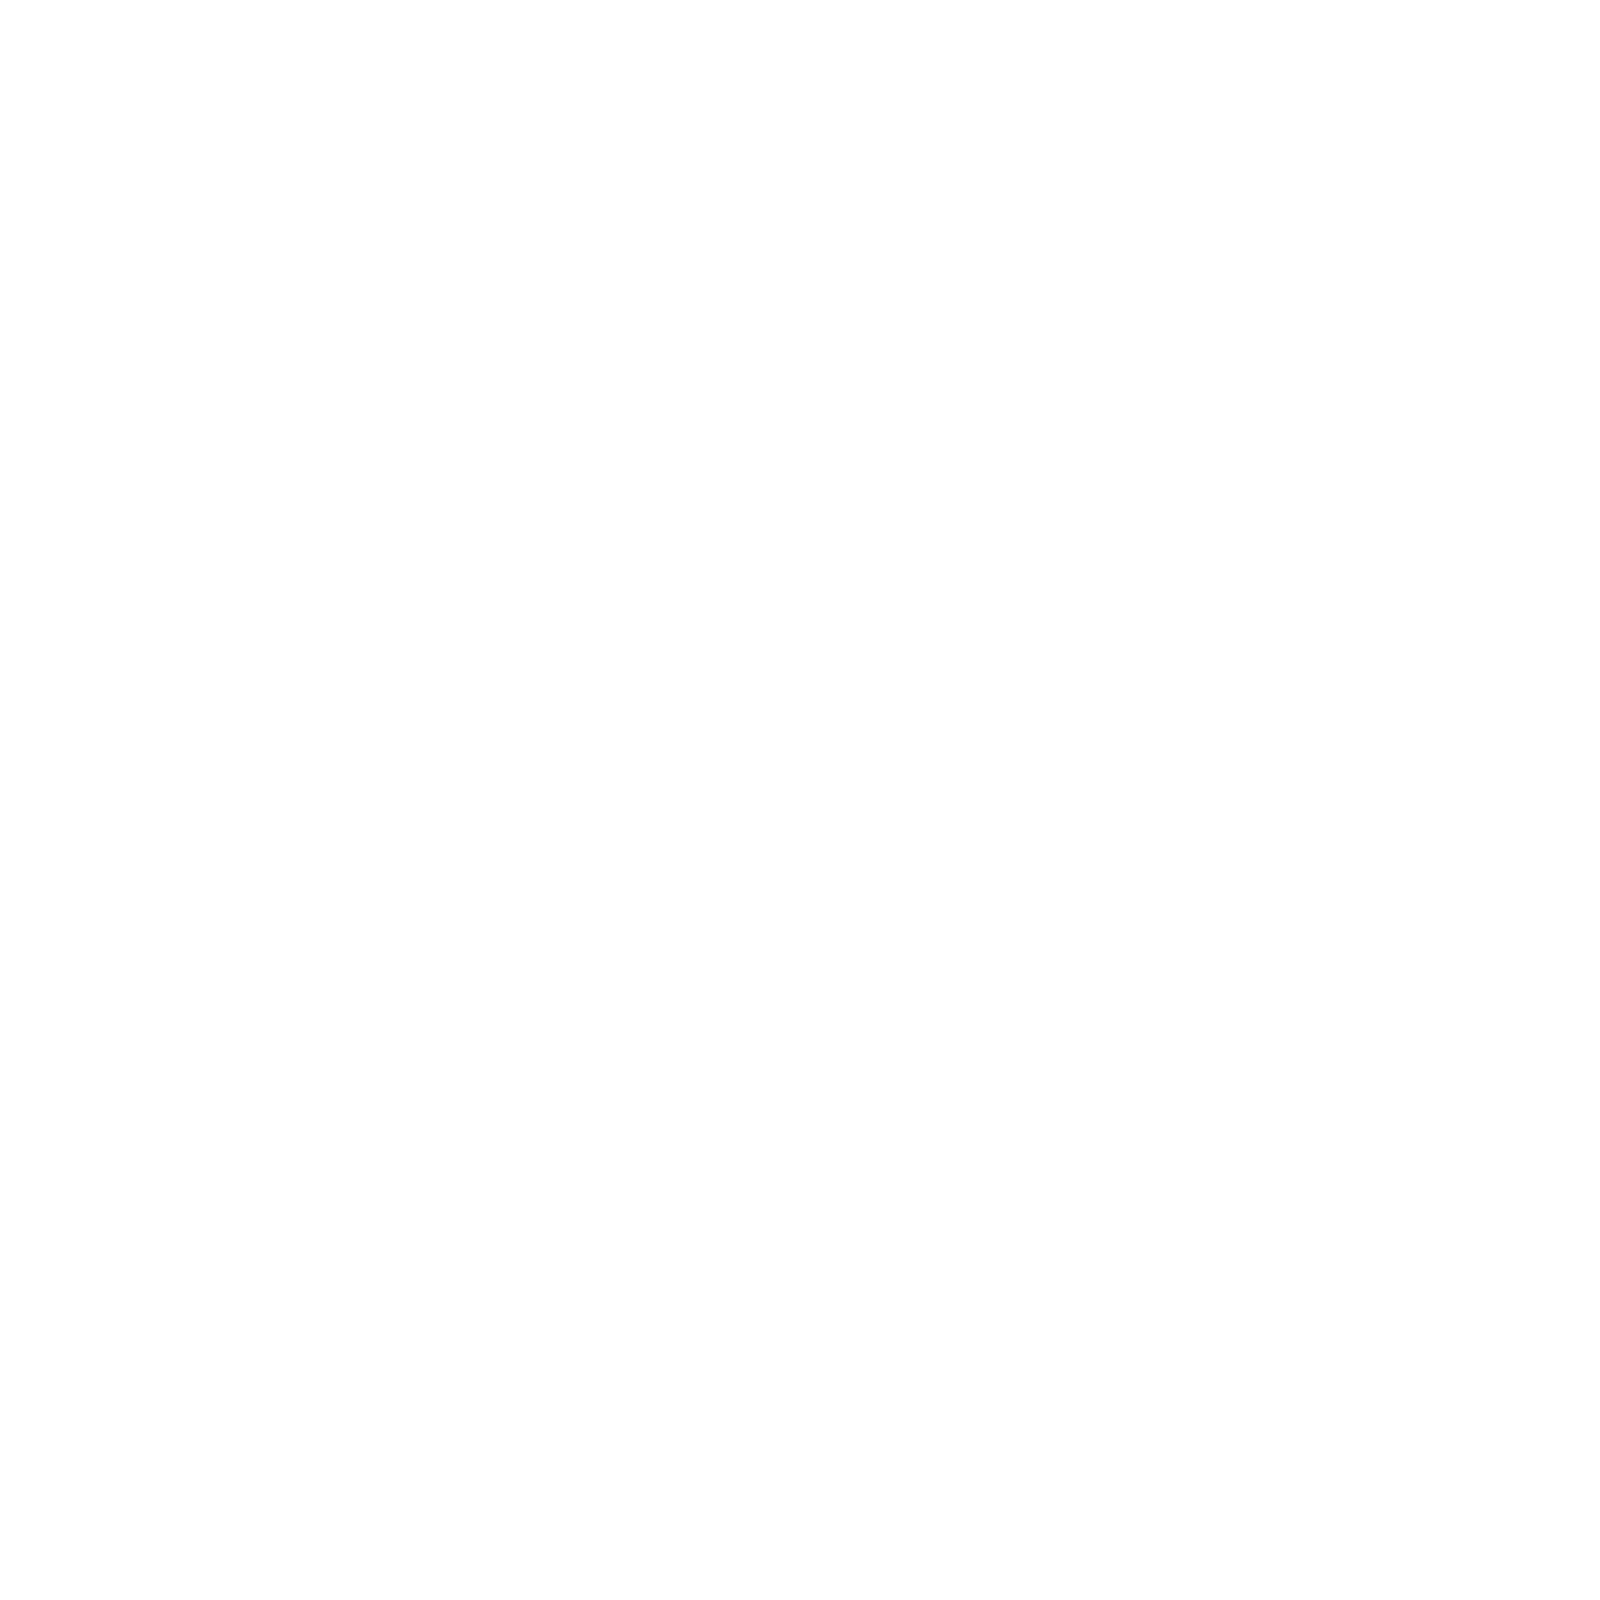 Golding logo on a transparent backdrop.